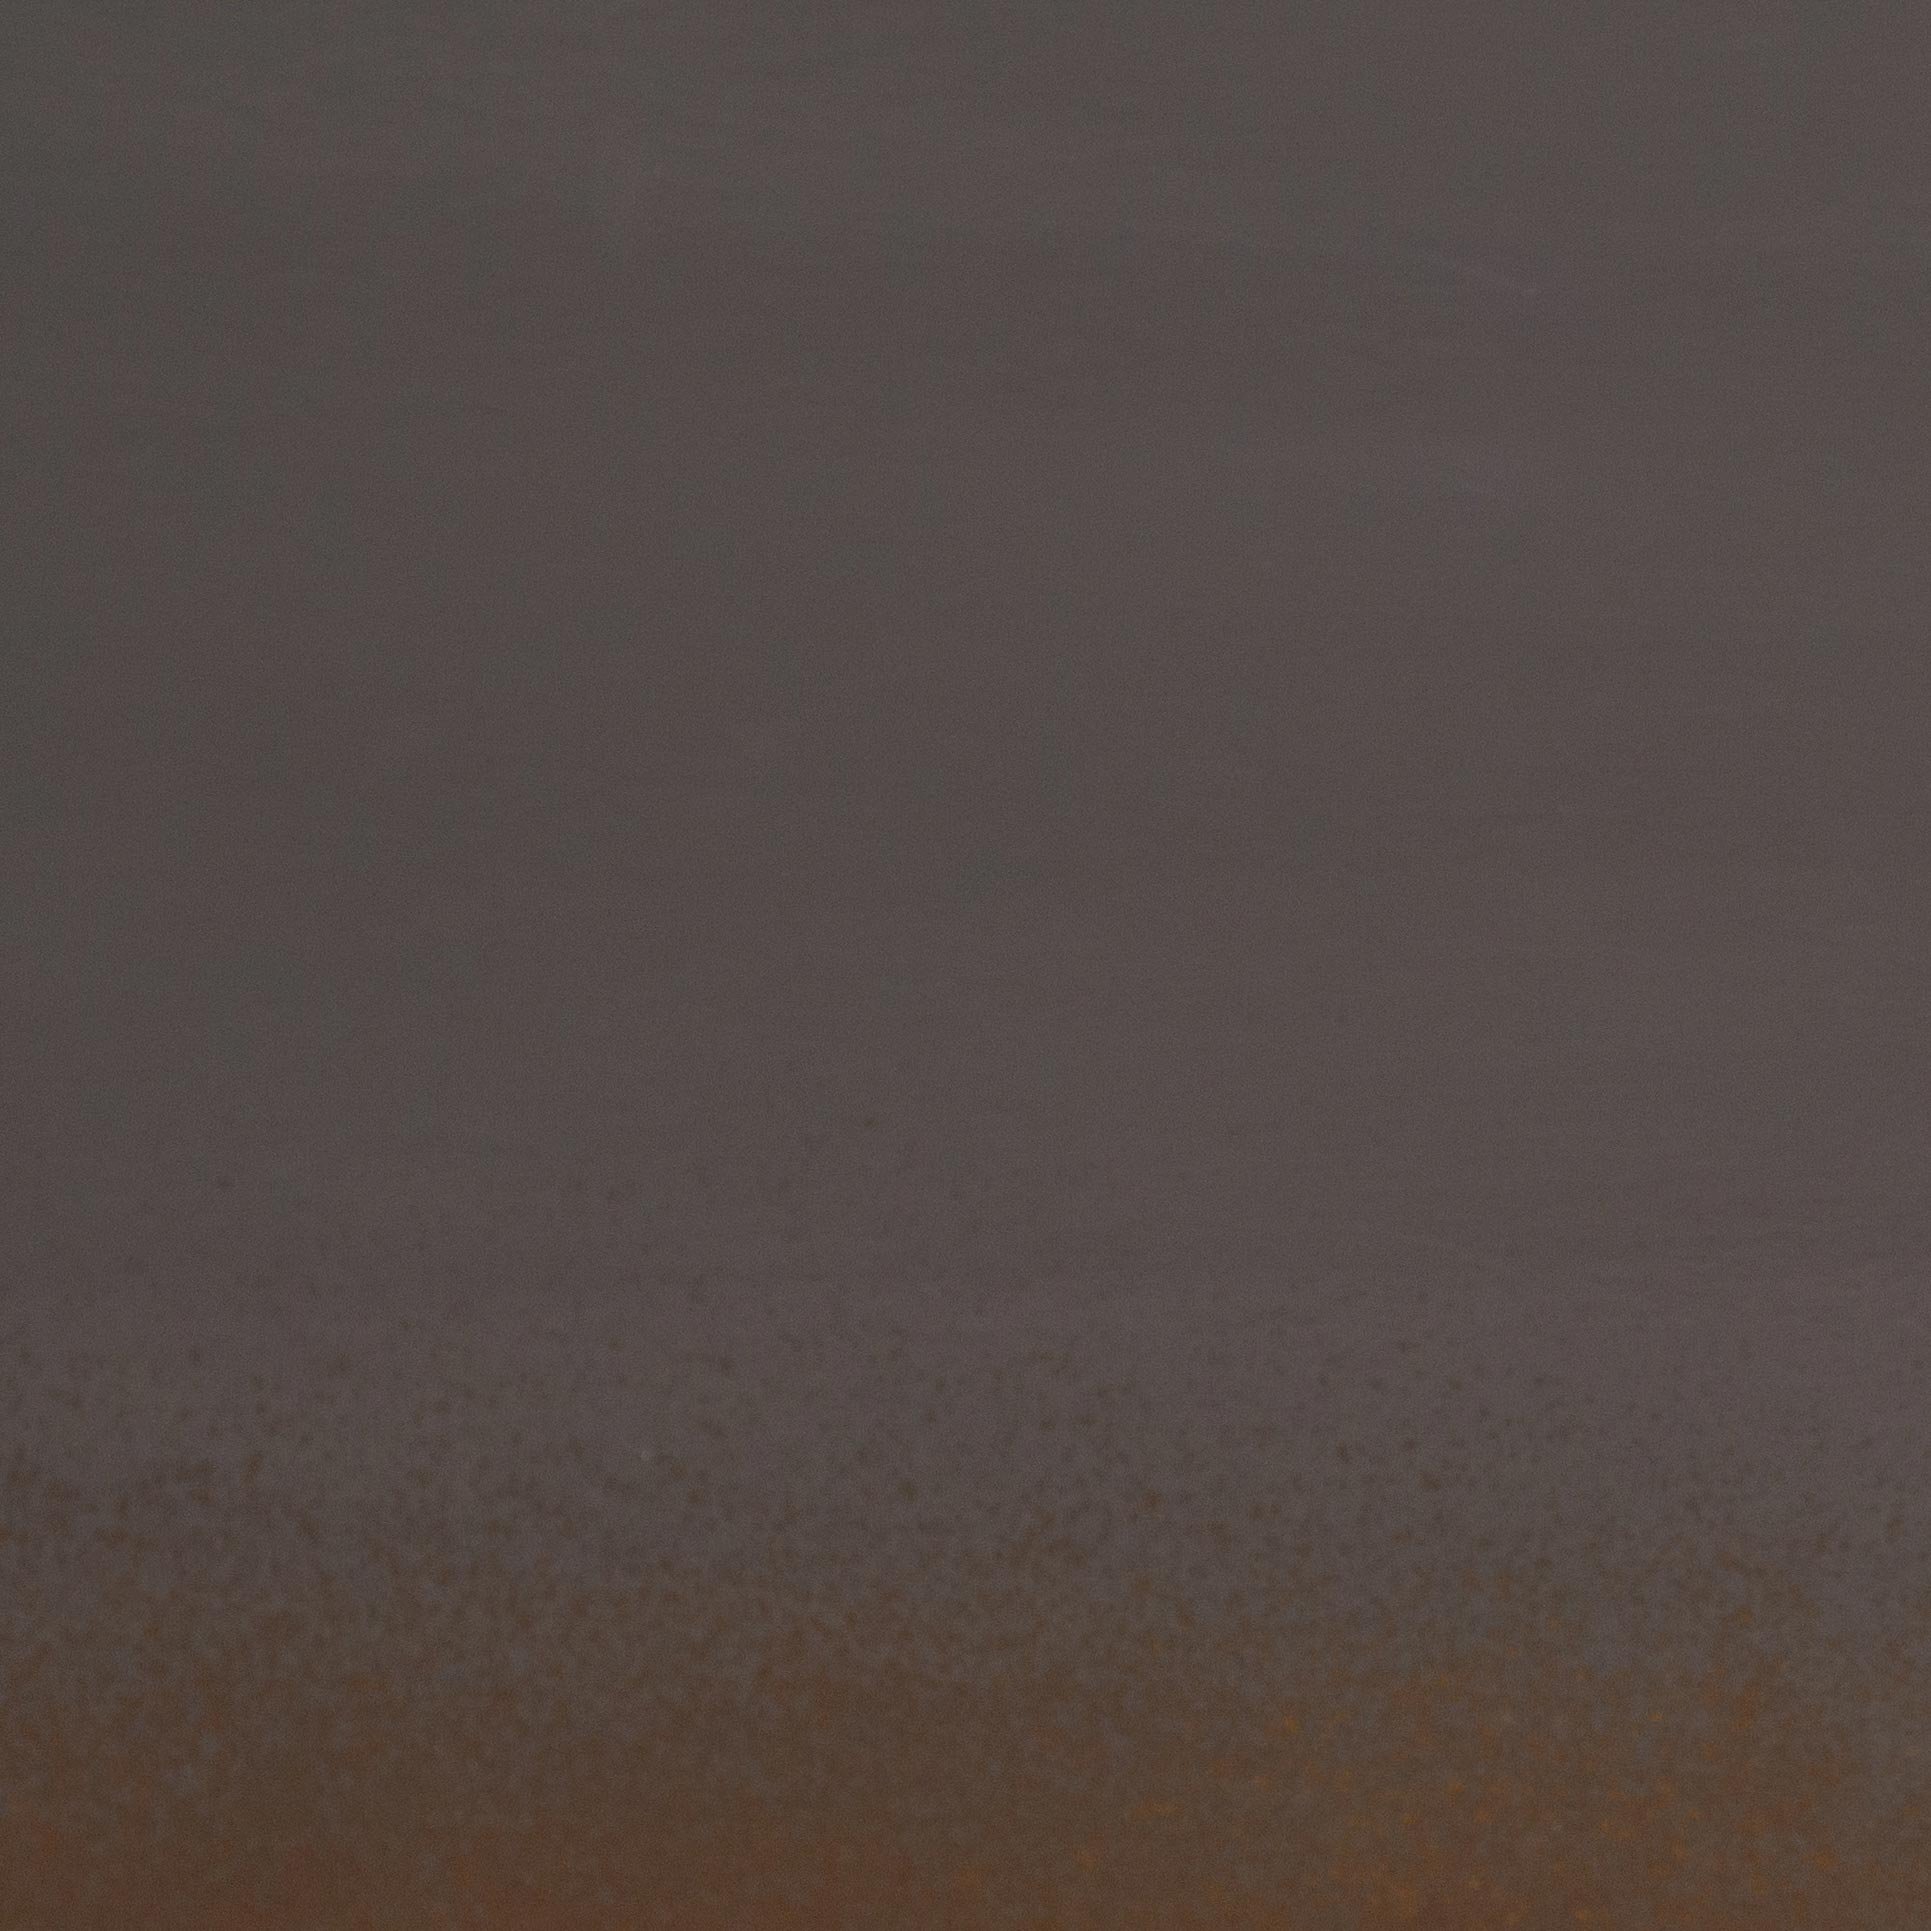 BIZEN, 2019 Water and Iron on Canvas 40 x 40 in (102 x 102 cm) Miya Ando 5.jpg